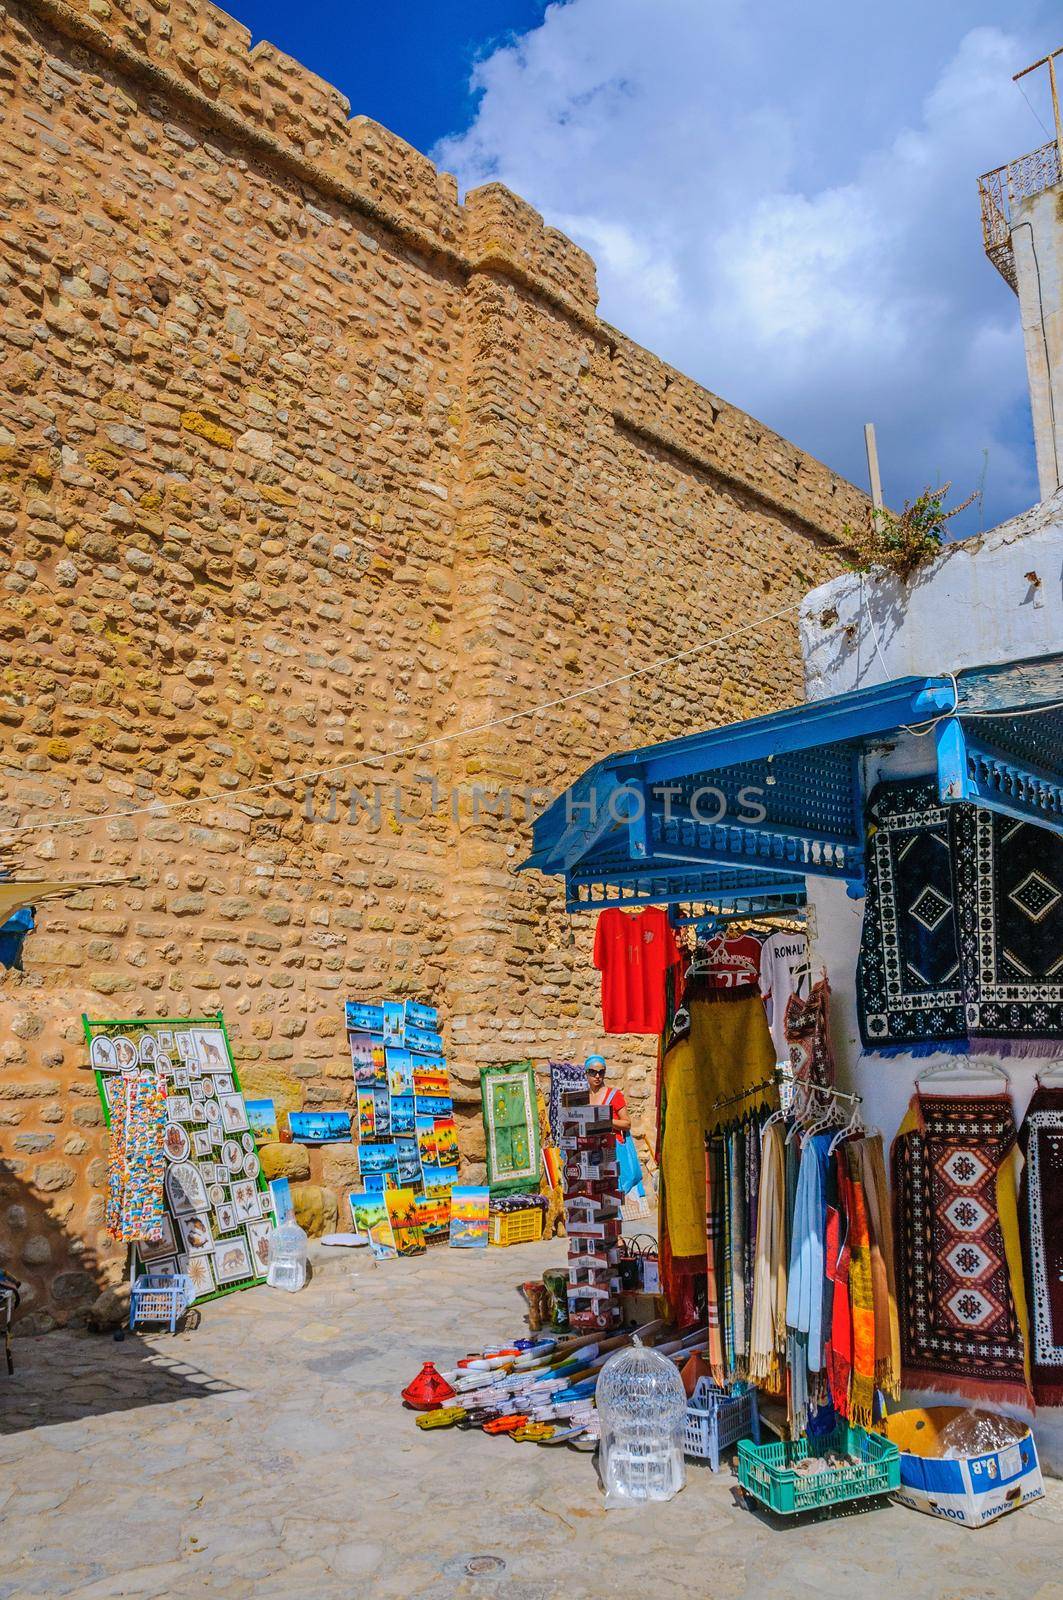 HAMMAMET, TUNISIA - Oct 2014: Stone ancient wall of Medina with bazaar on October 6, 2014 by Eagle2308